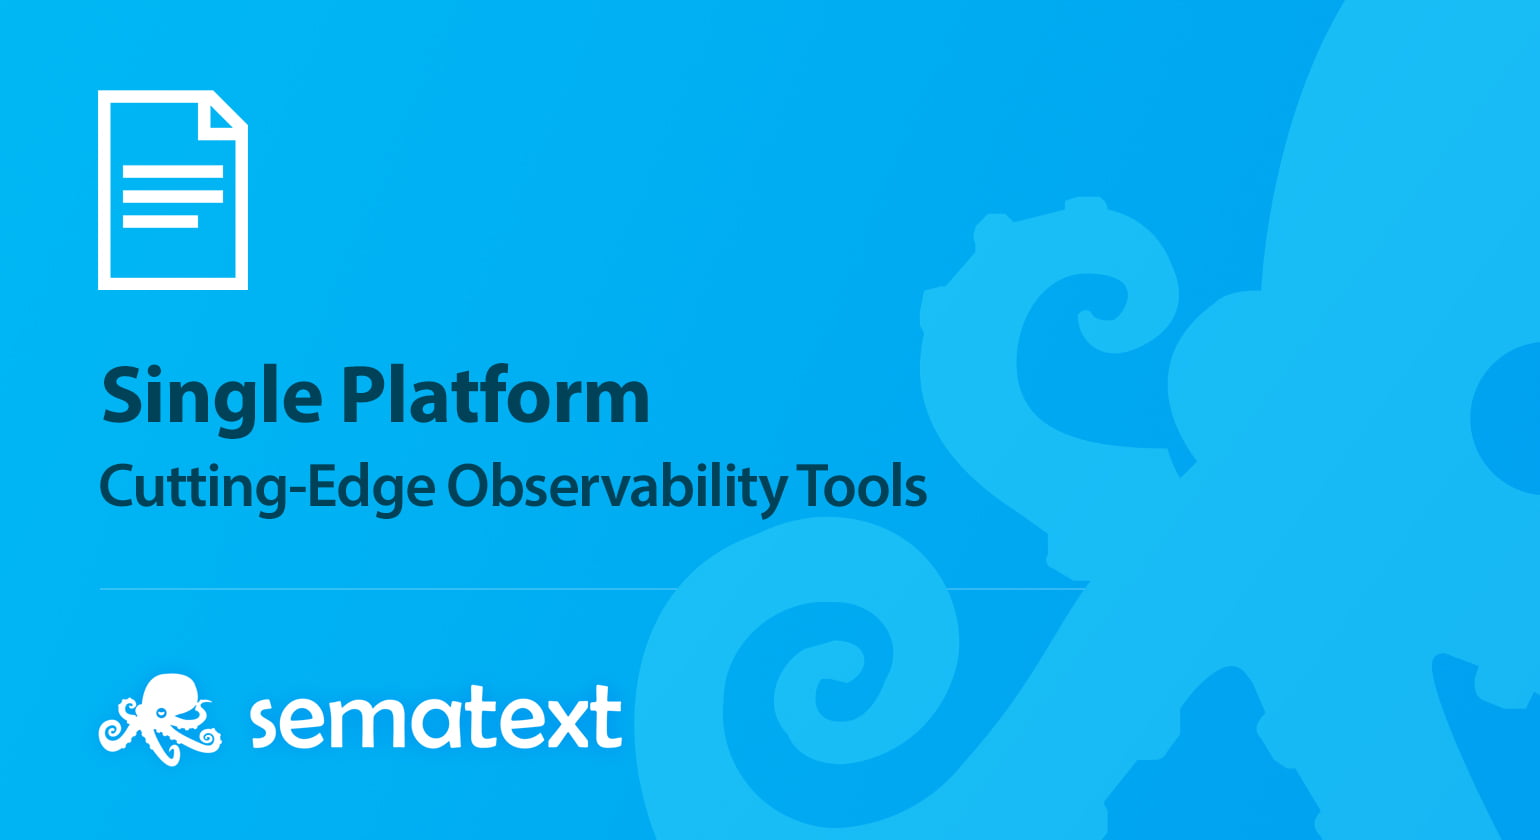 Cutting-Edge Observability Tools in a Single Platform